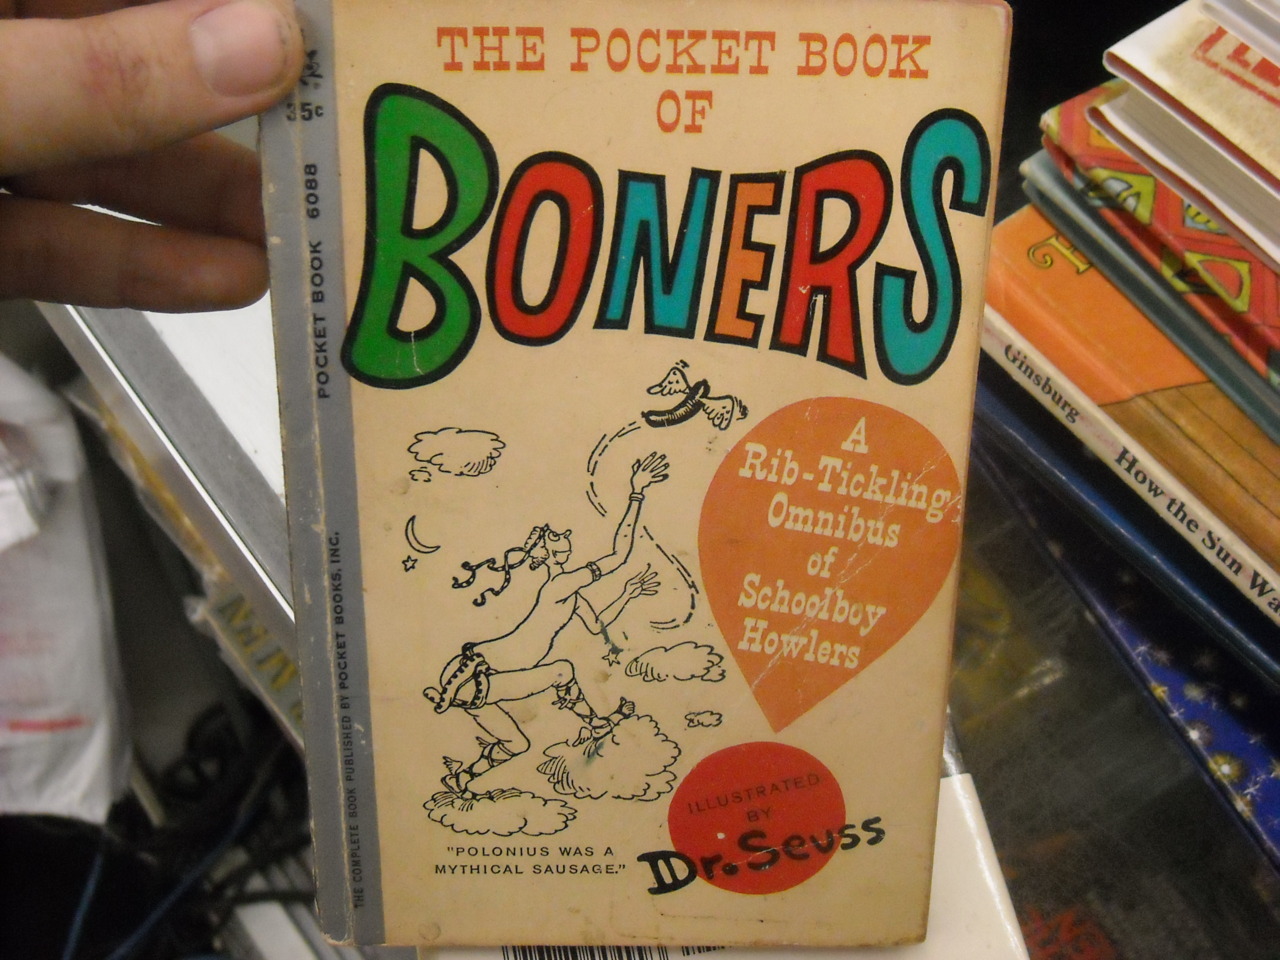 The book of boners